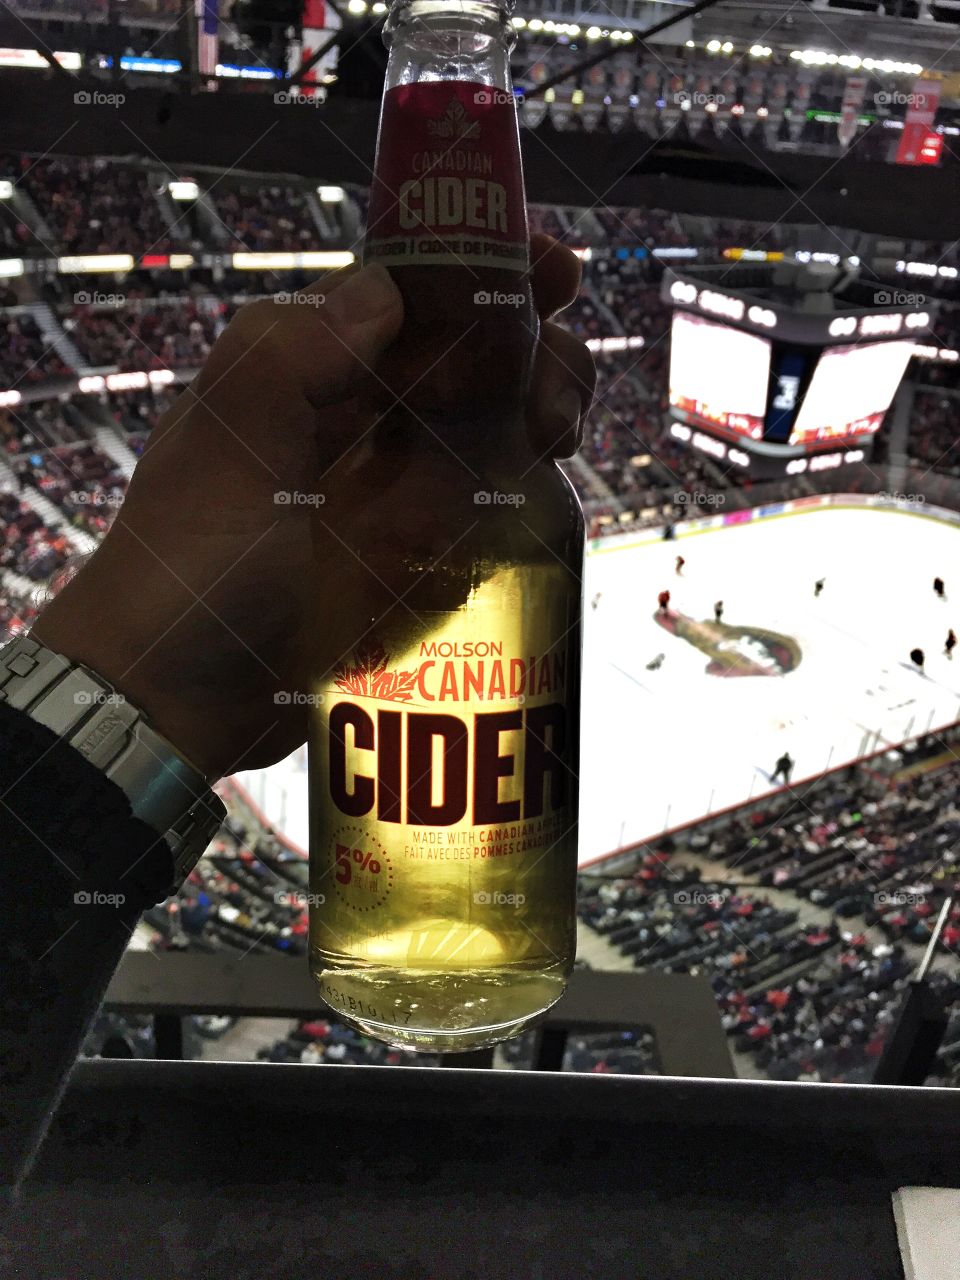 Hockey and Cider... Now that's Canadian!!!

VIP box at an Ottawa Senators Game